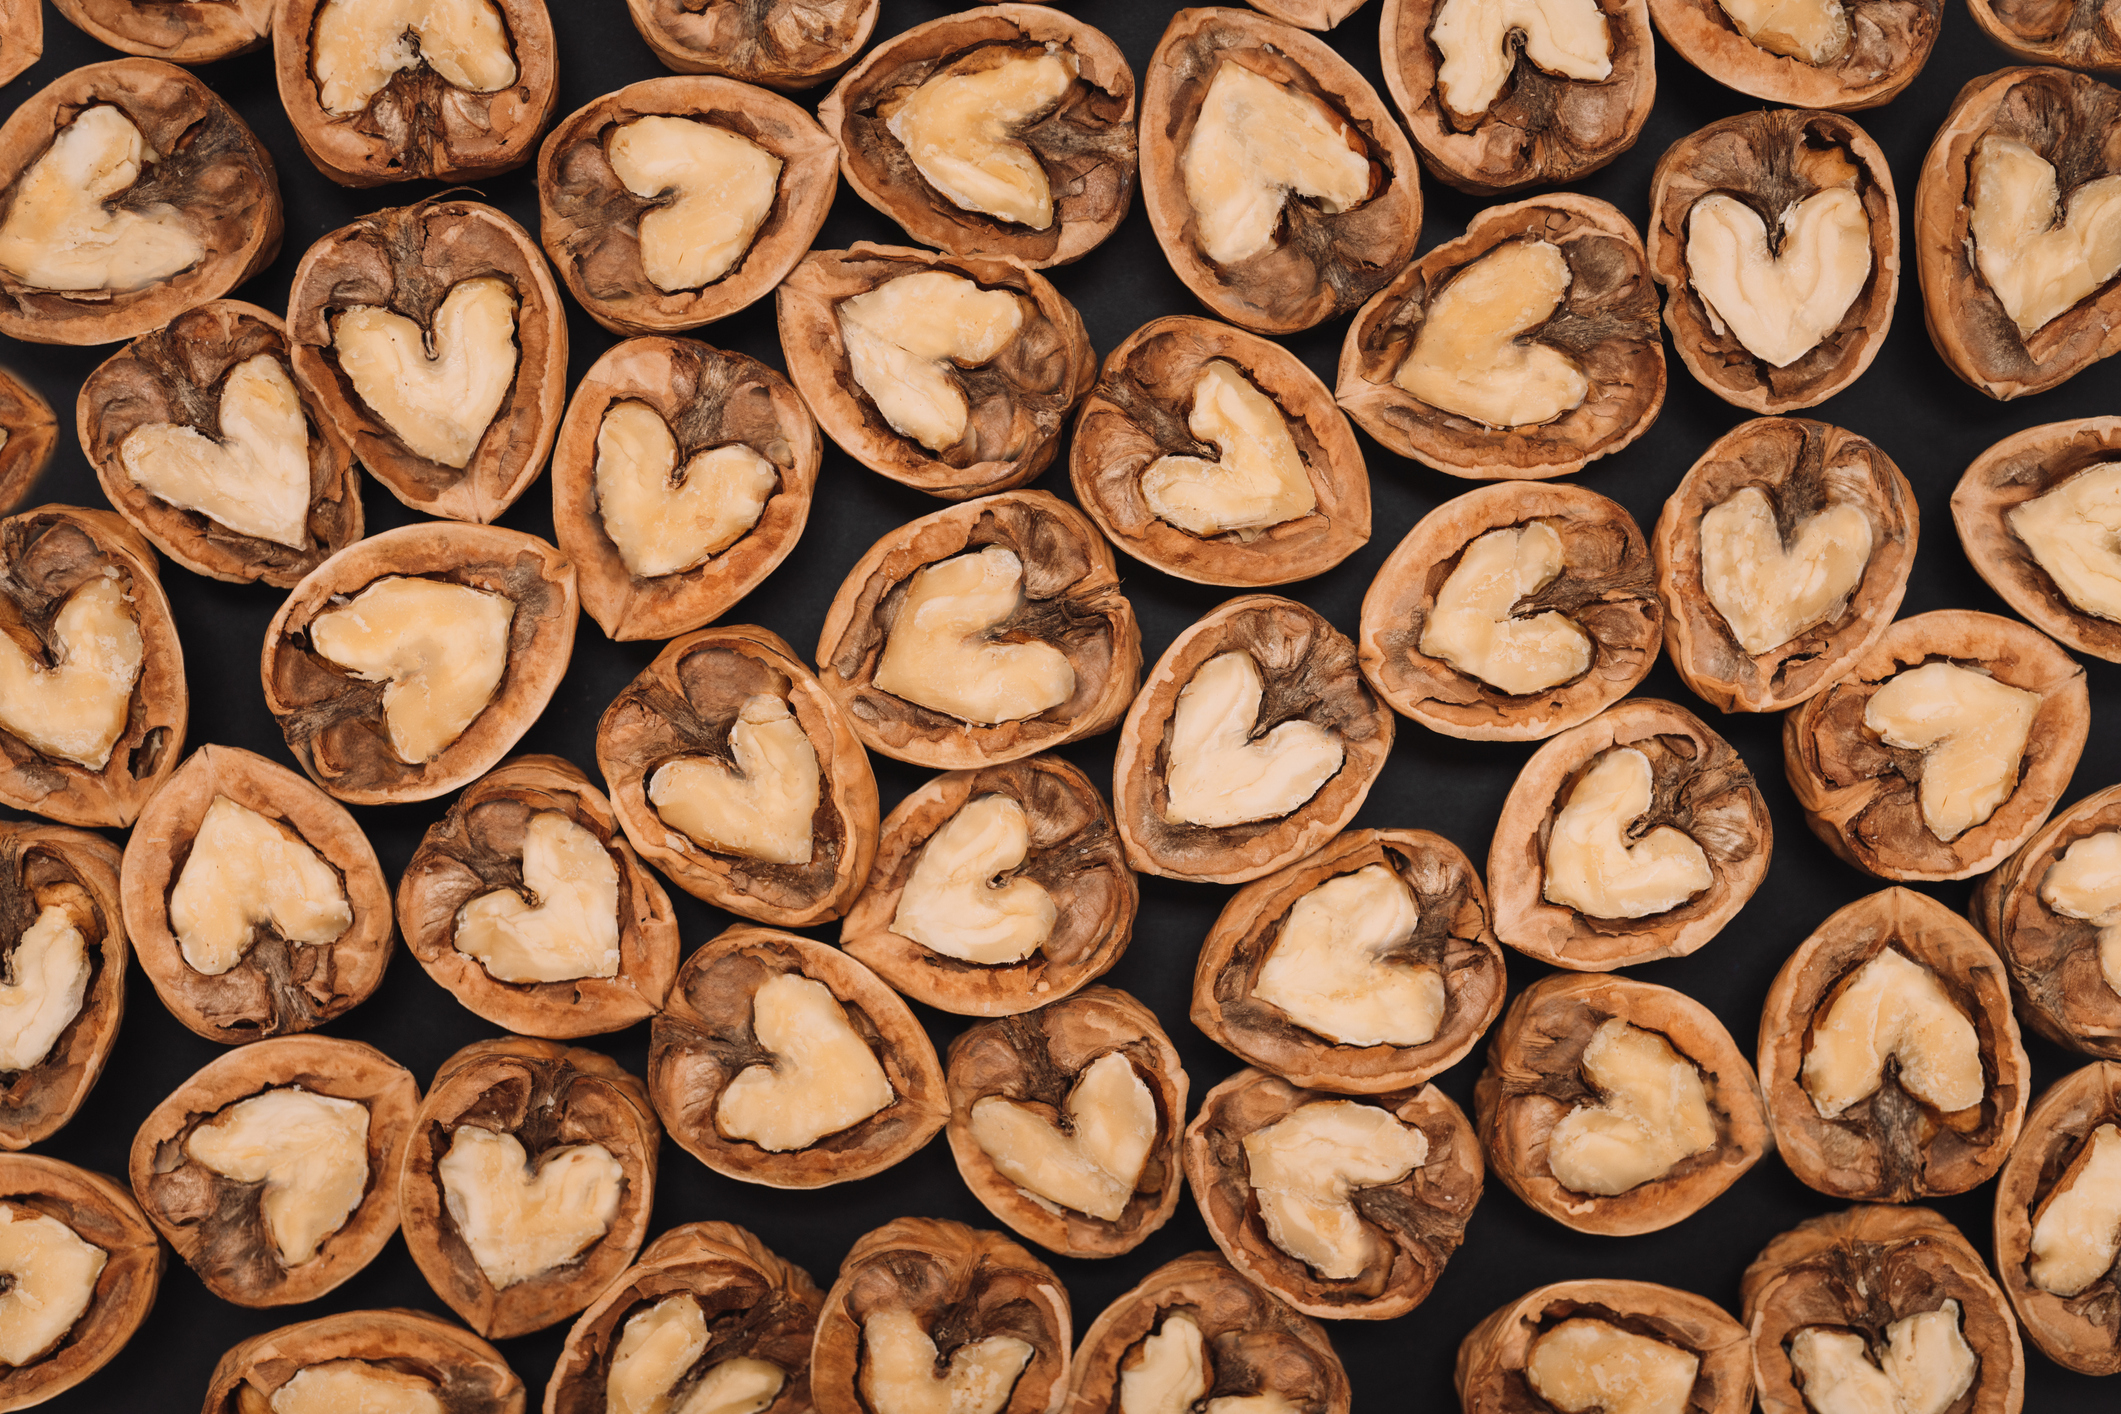 New way walnuts improve cholesterol discovered